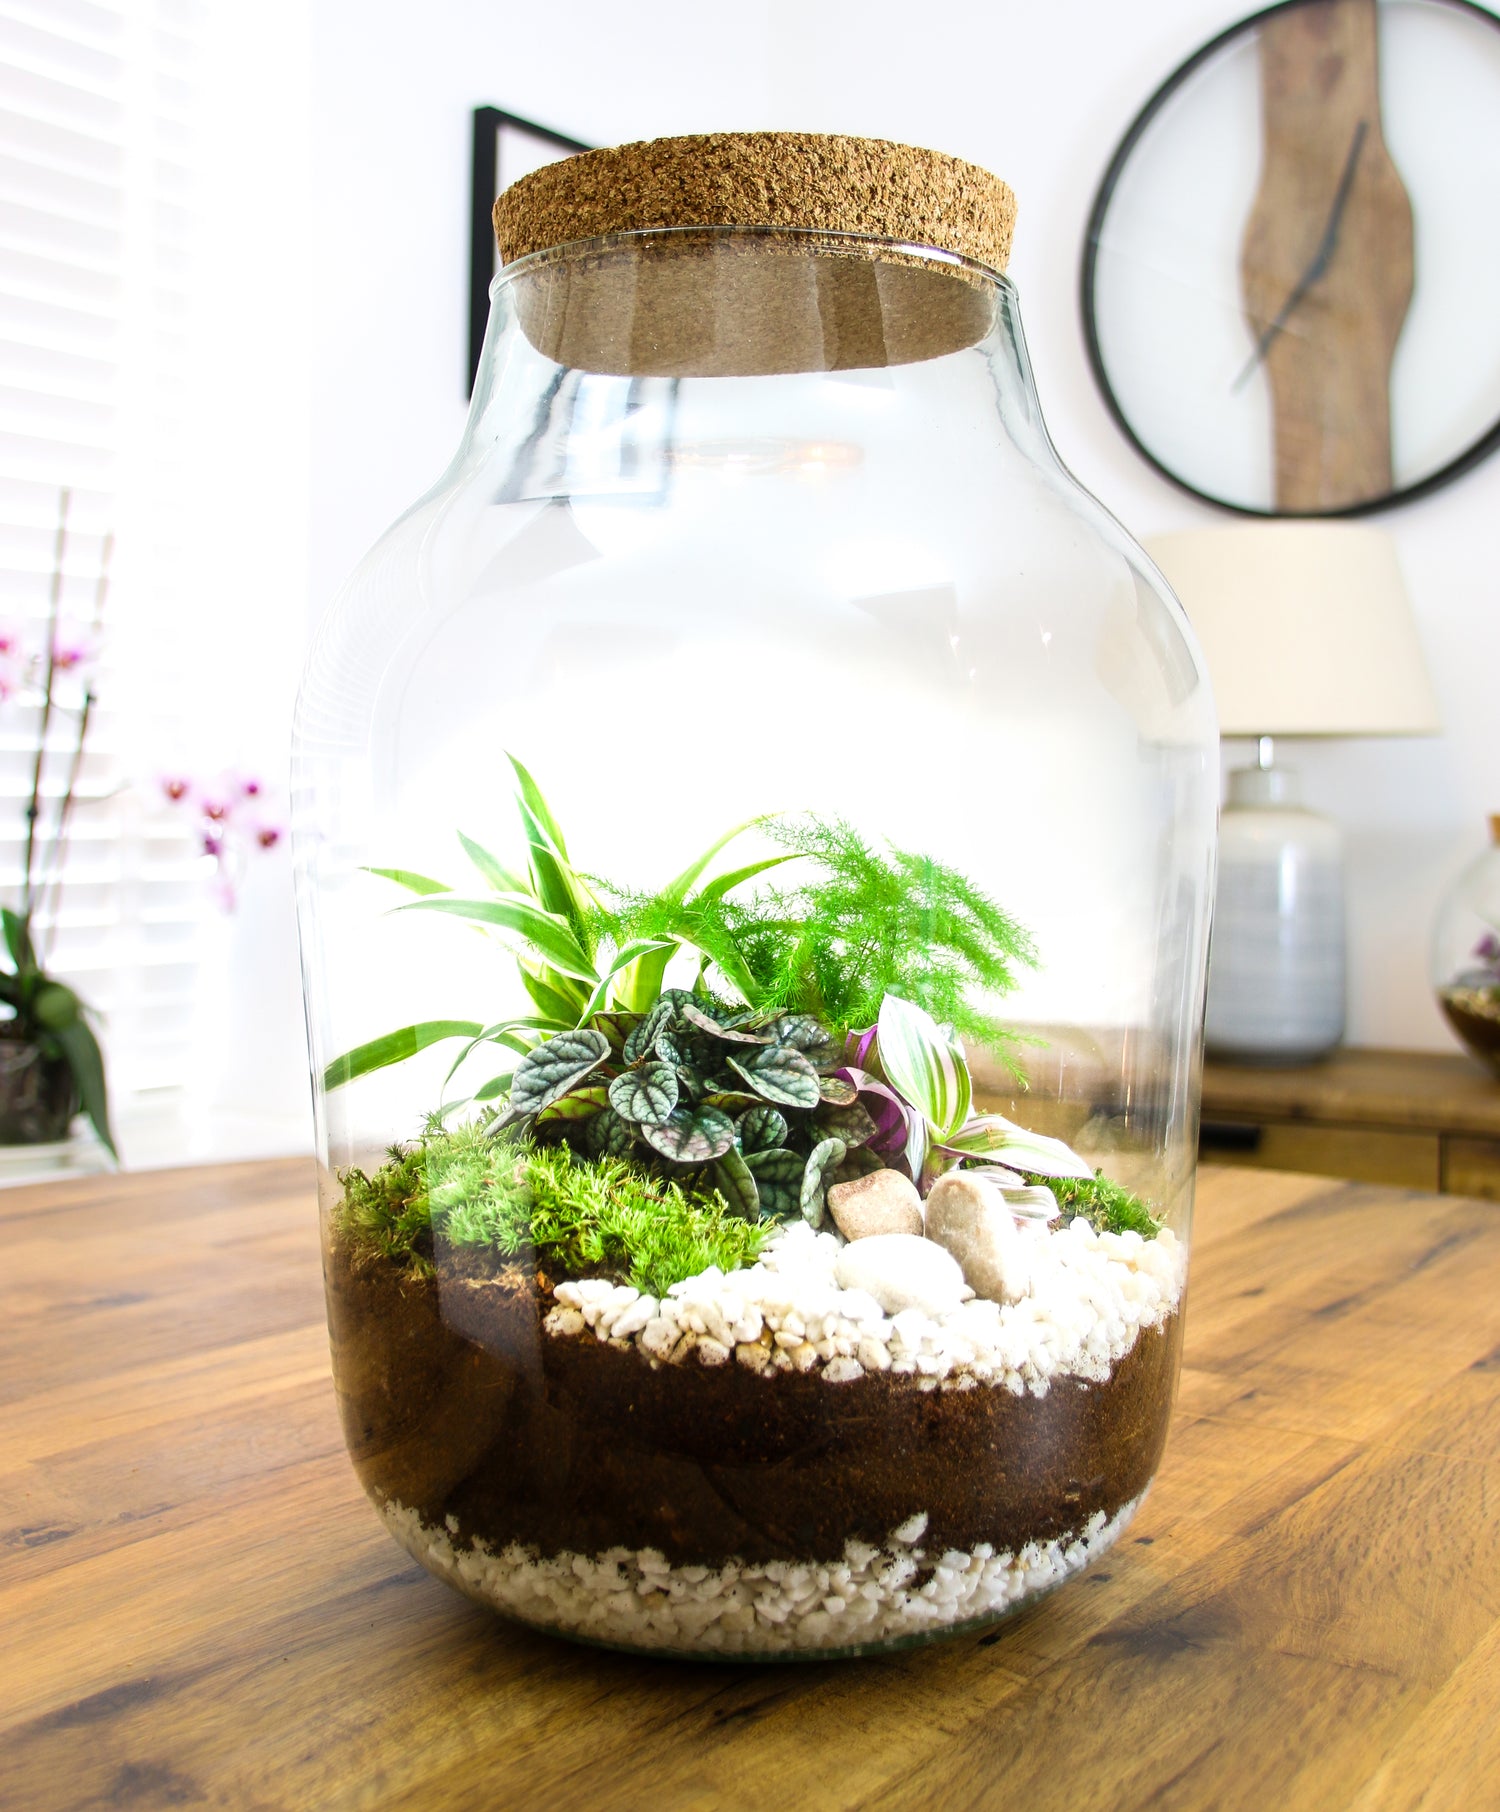 Terrarium kit for the home, terrarium gift with plants